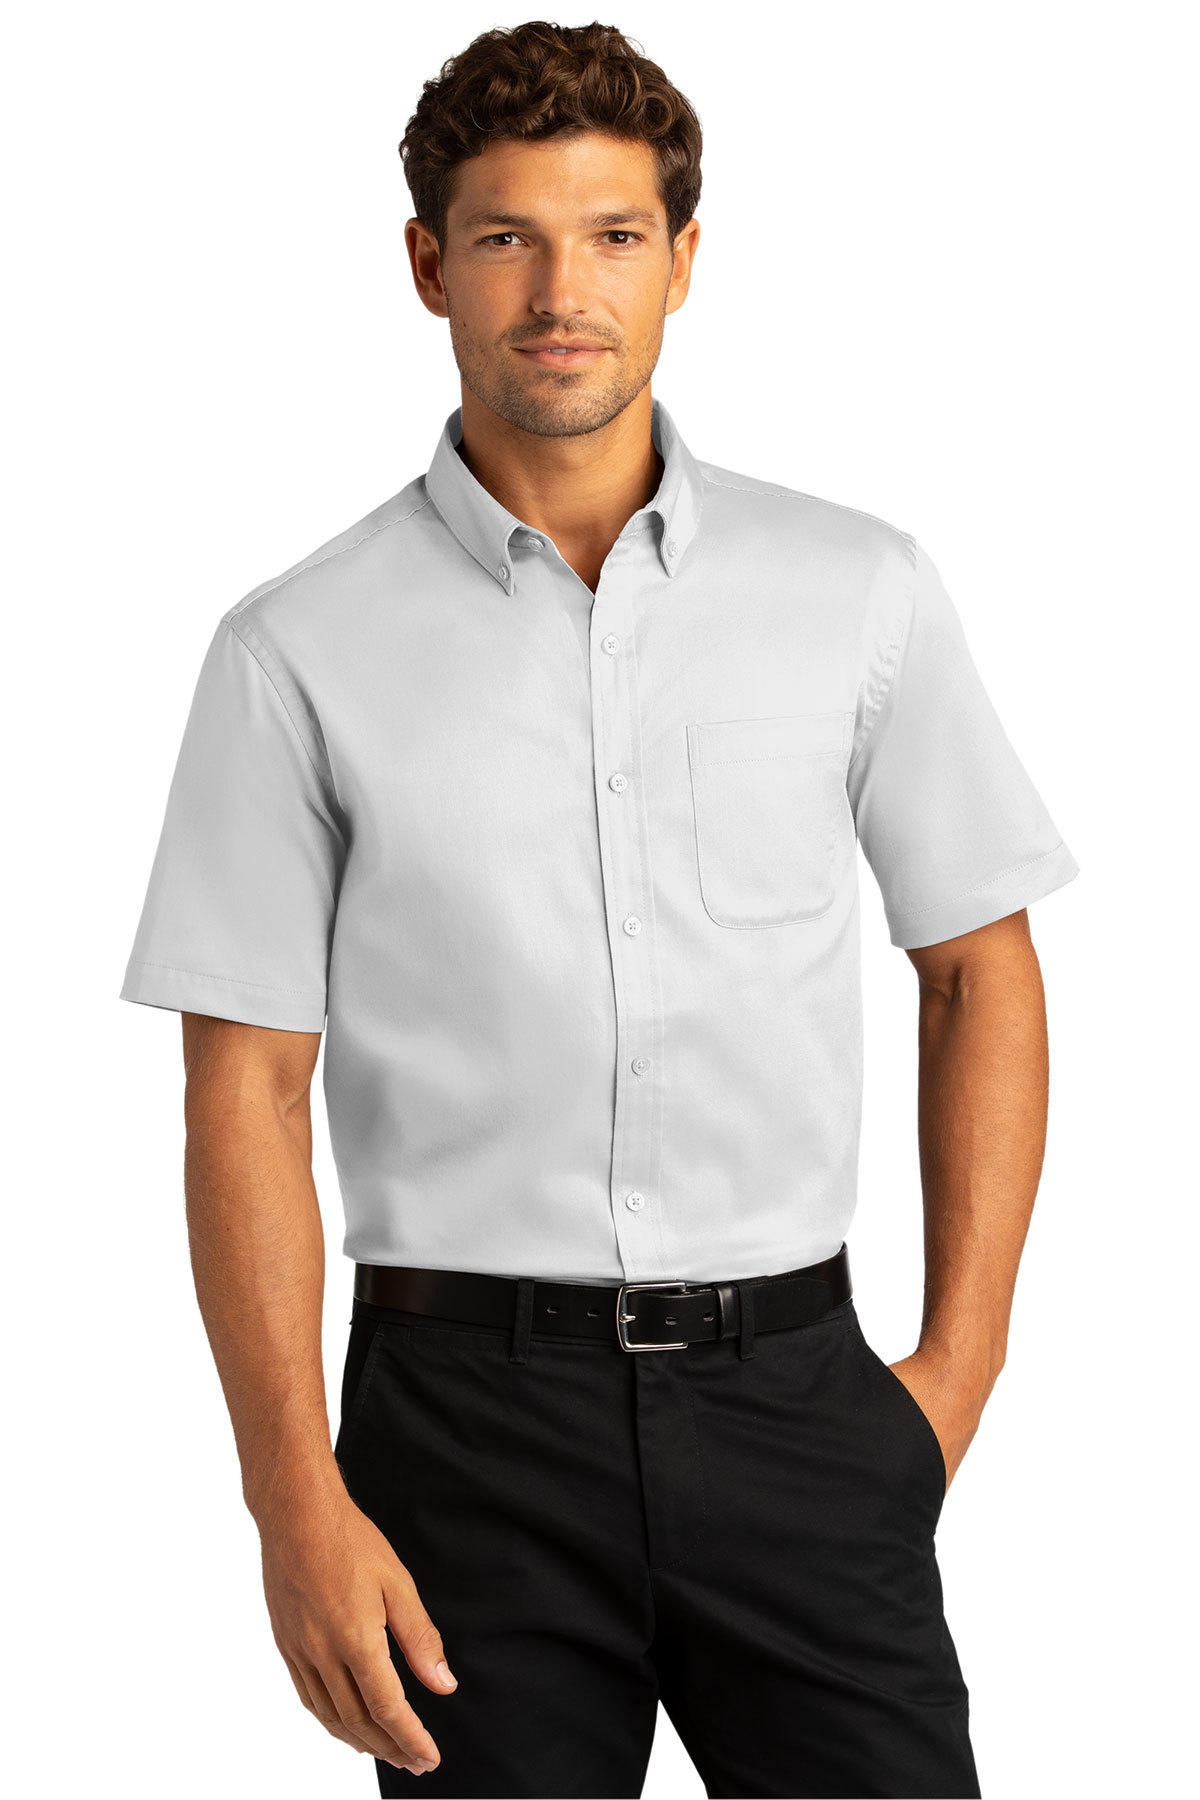 Port Authority Short Sleeve SuperPro ReactTwill Shirt | Product | SanMar